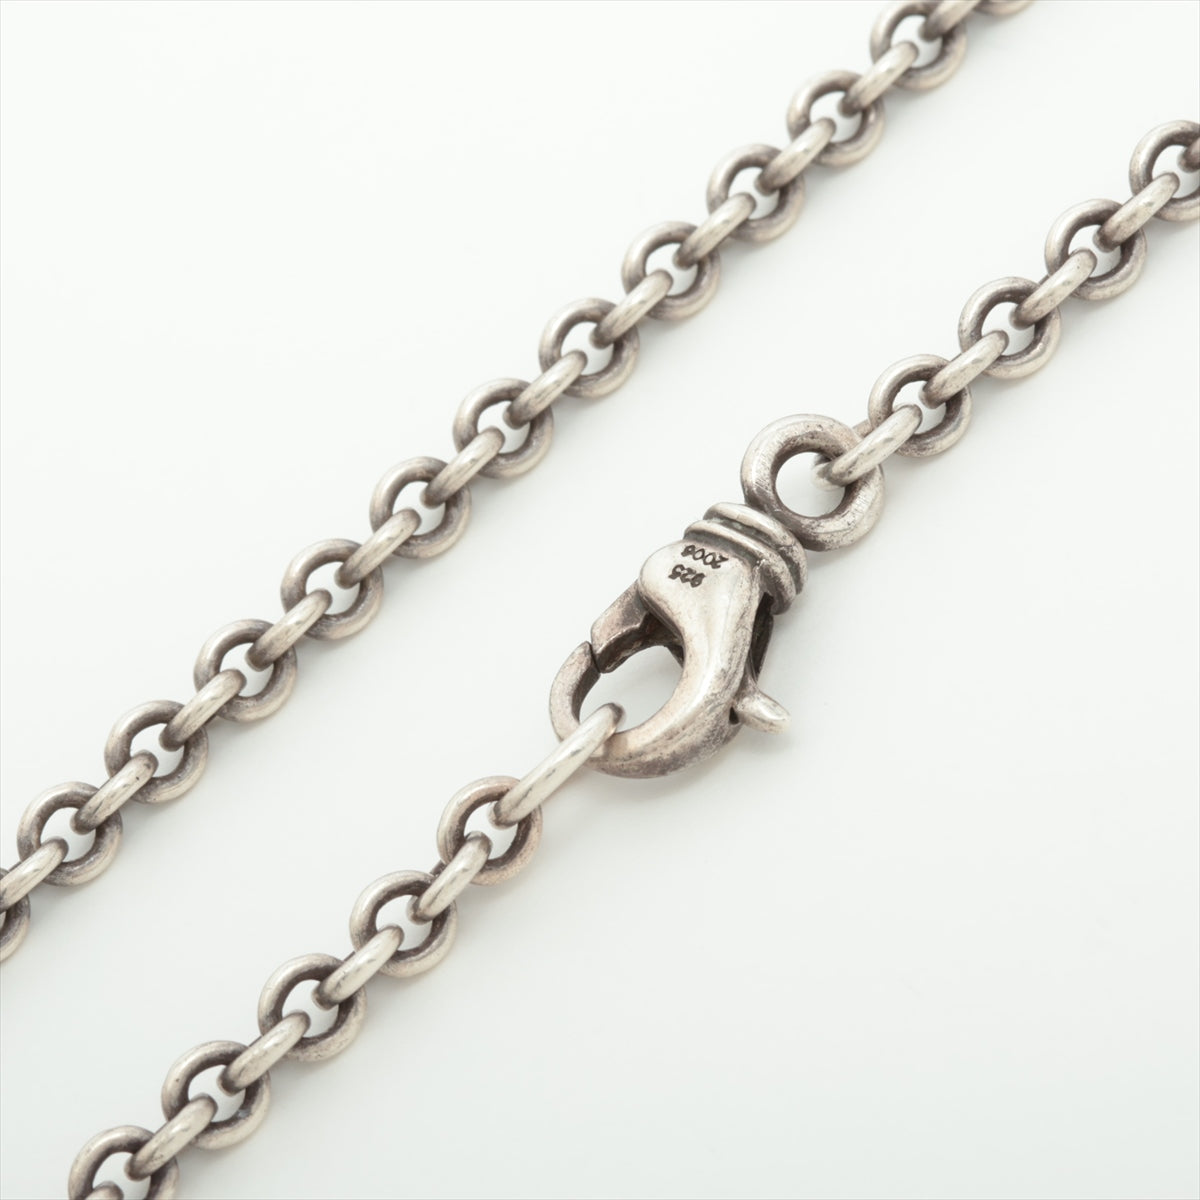 Chrome Hearts NE chain 18 inches Necklace 925 21.5g